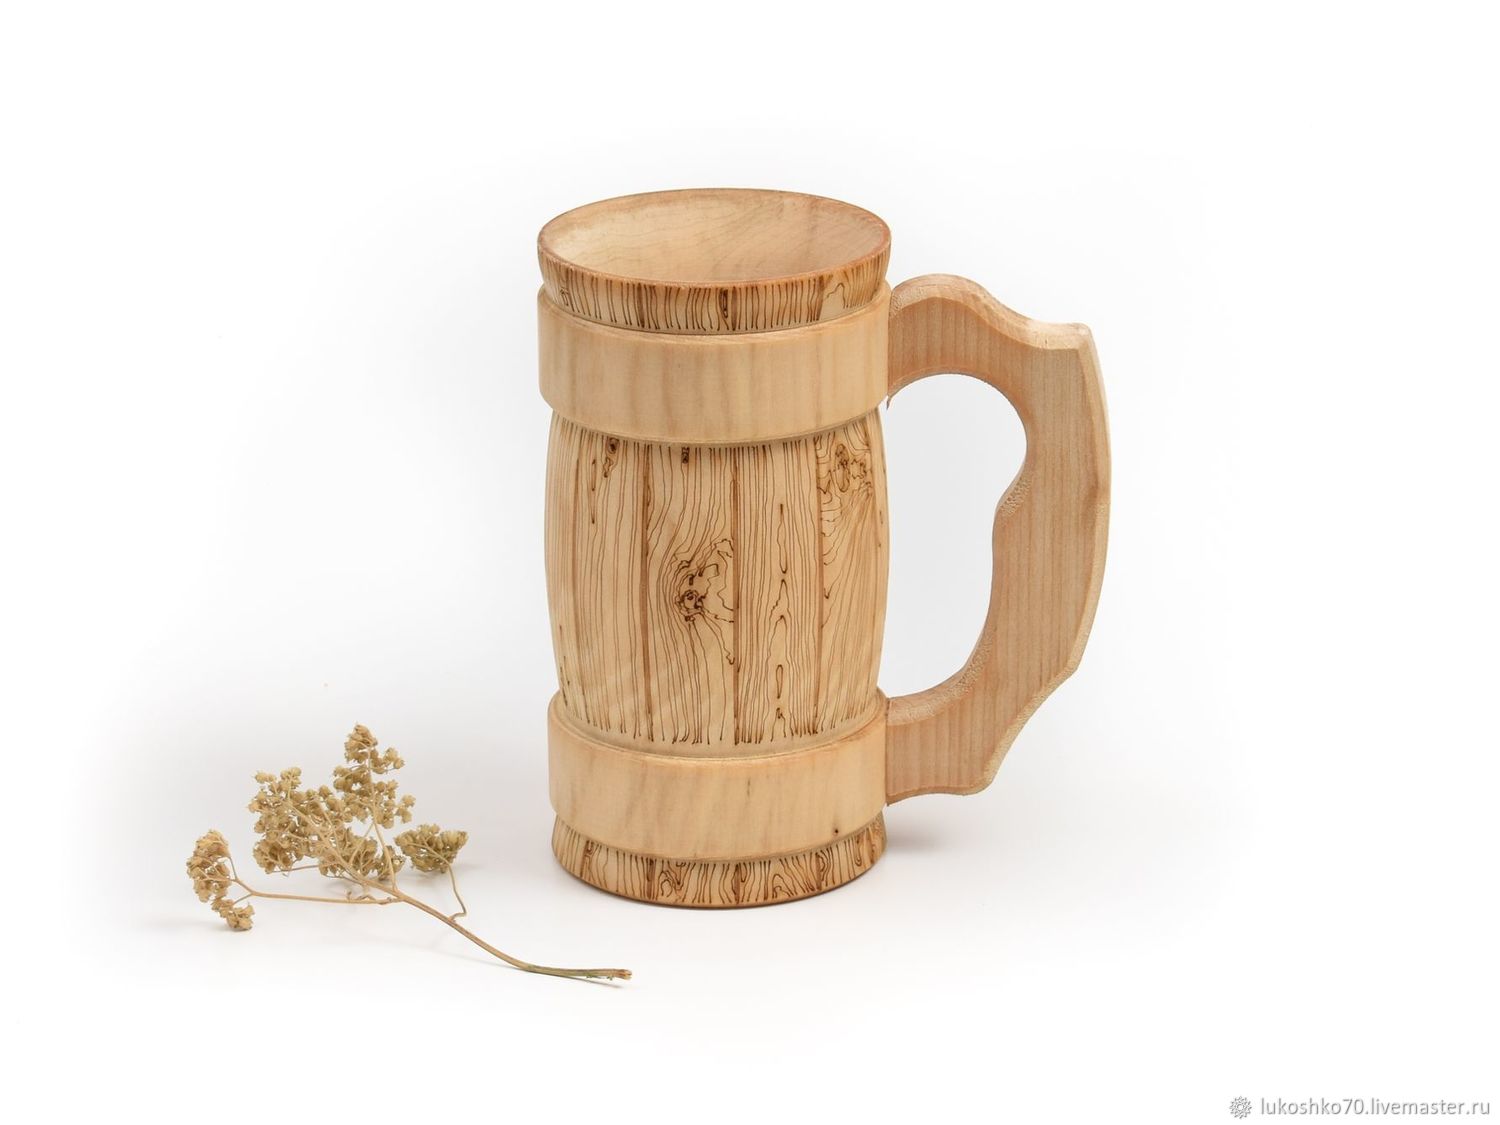 Light wooden mug. Wooden beer mug 0.7, Mugs and cups, Tomsk,  Фото №1